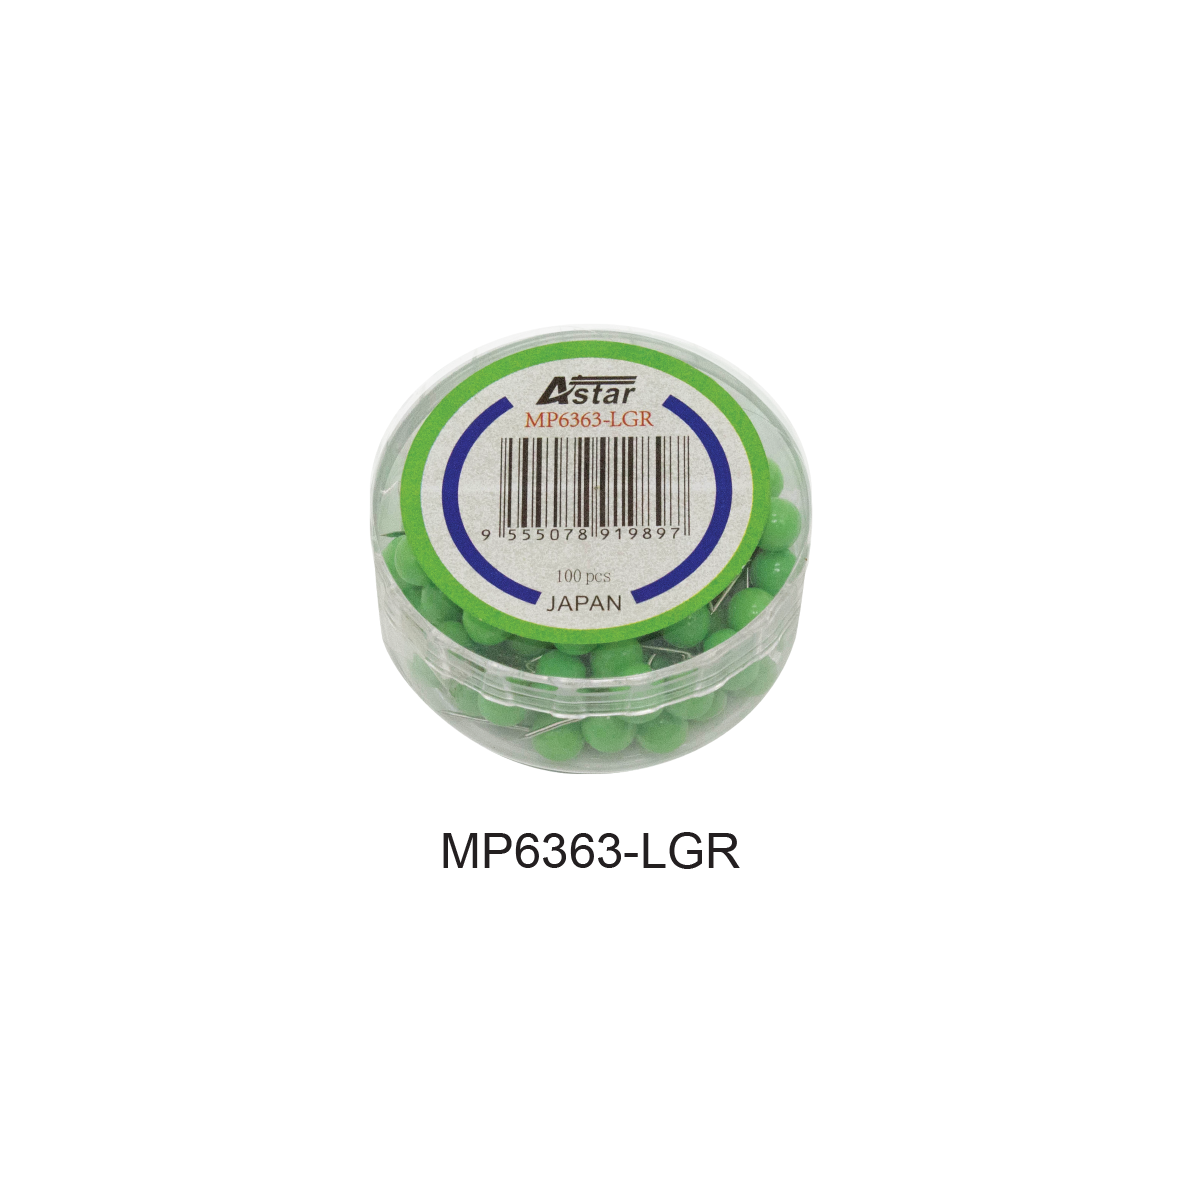 MP6363-LGR - ASTAR MAP PIN